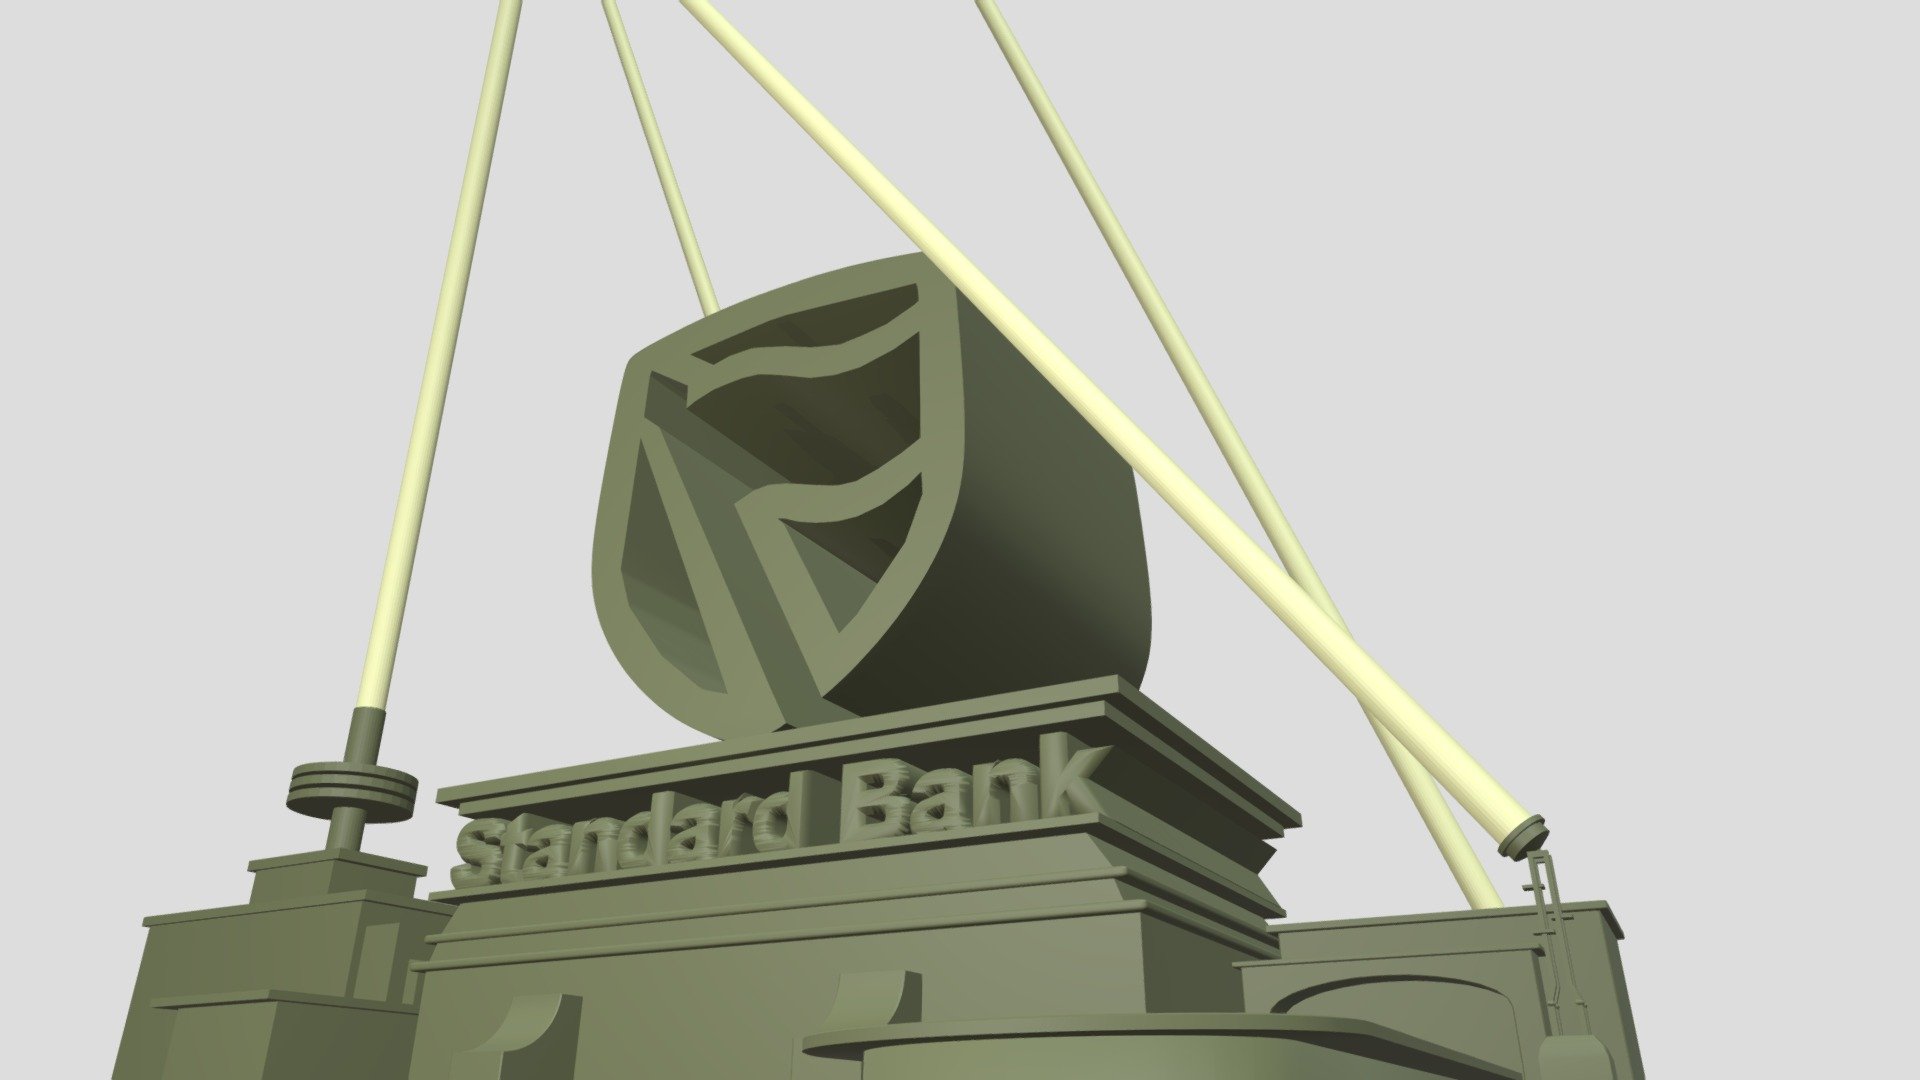 standard bank moving forward logo